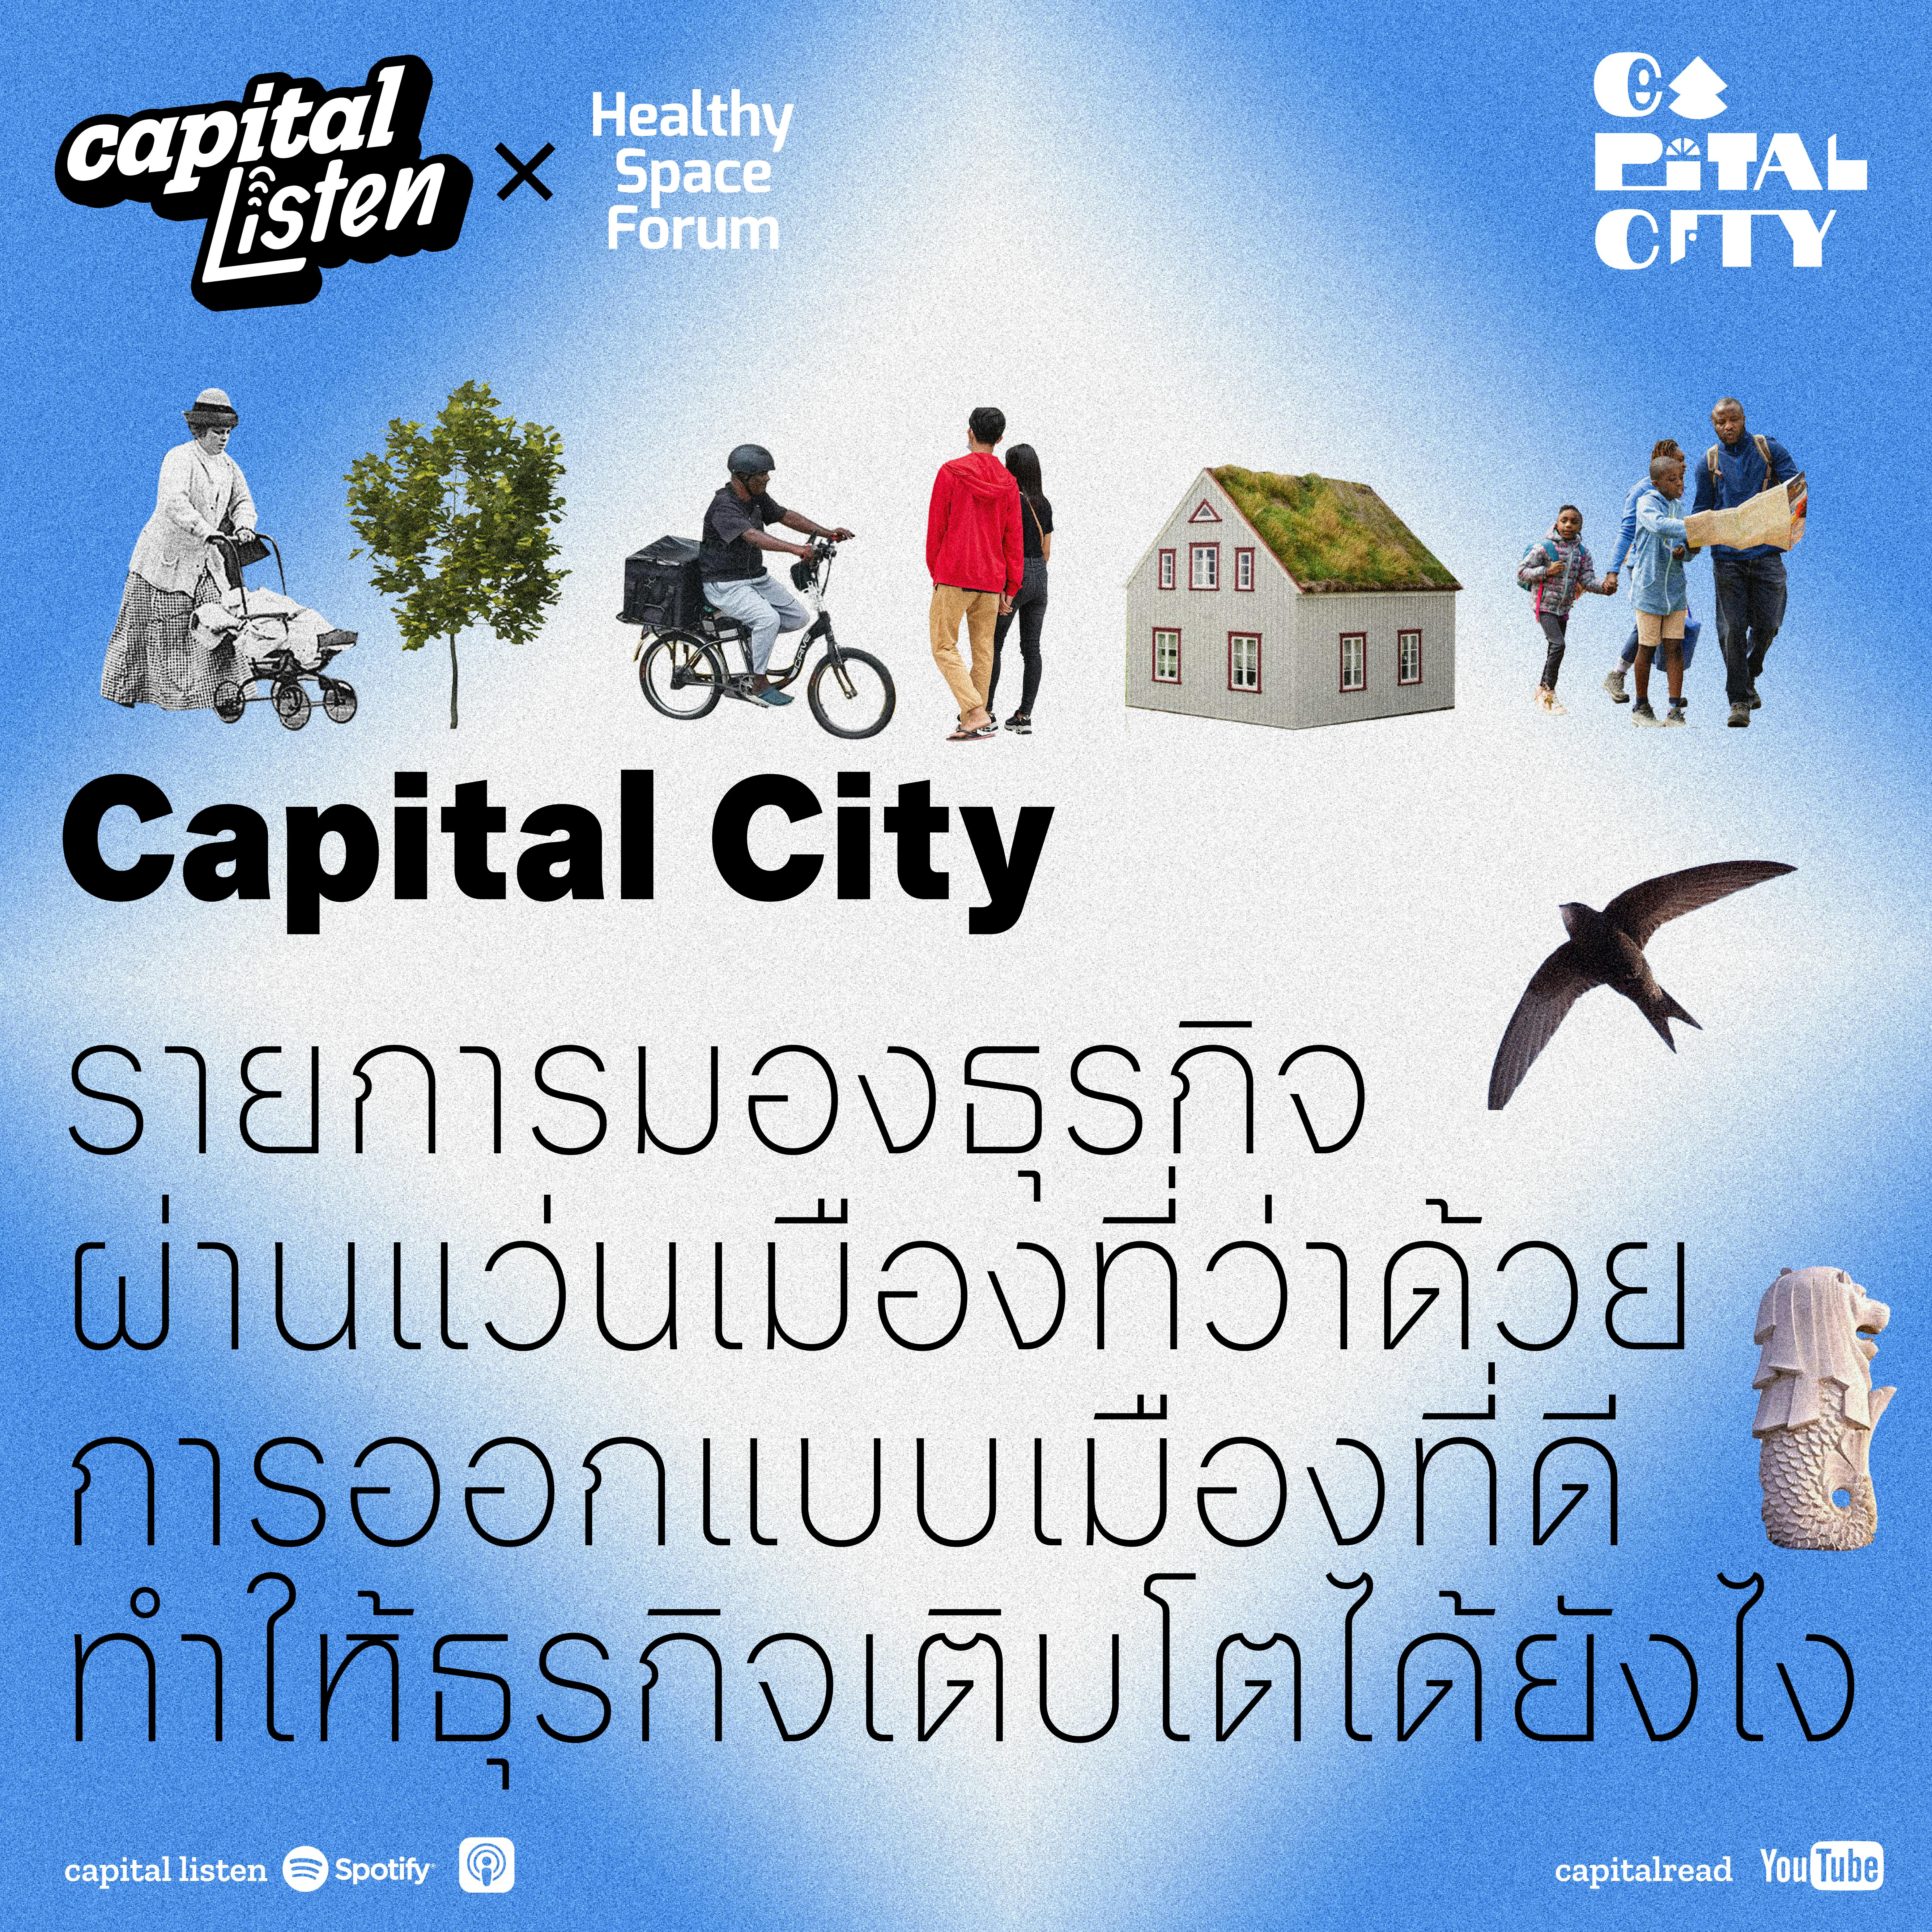 Capital City รายการมองธุรกิจผ่านแว่นเมือง ที่ว่าด้วยการออกแบบเมืองทำให้ธุรกิ